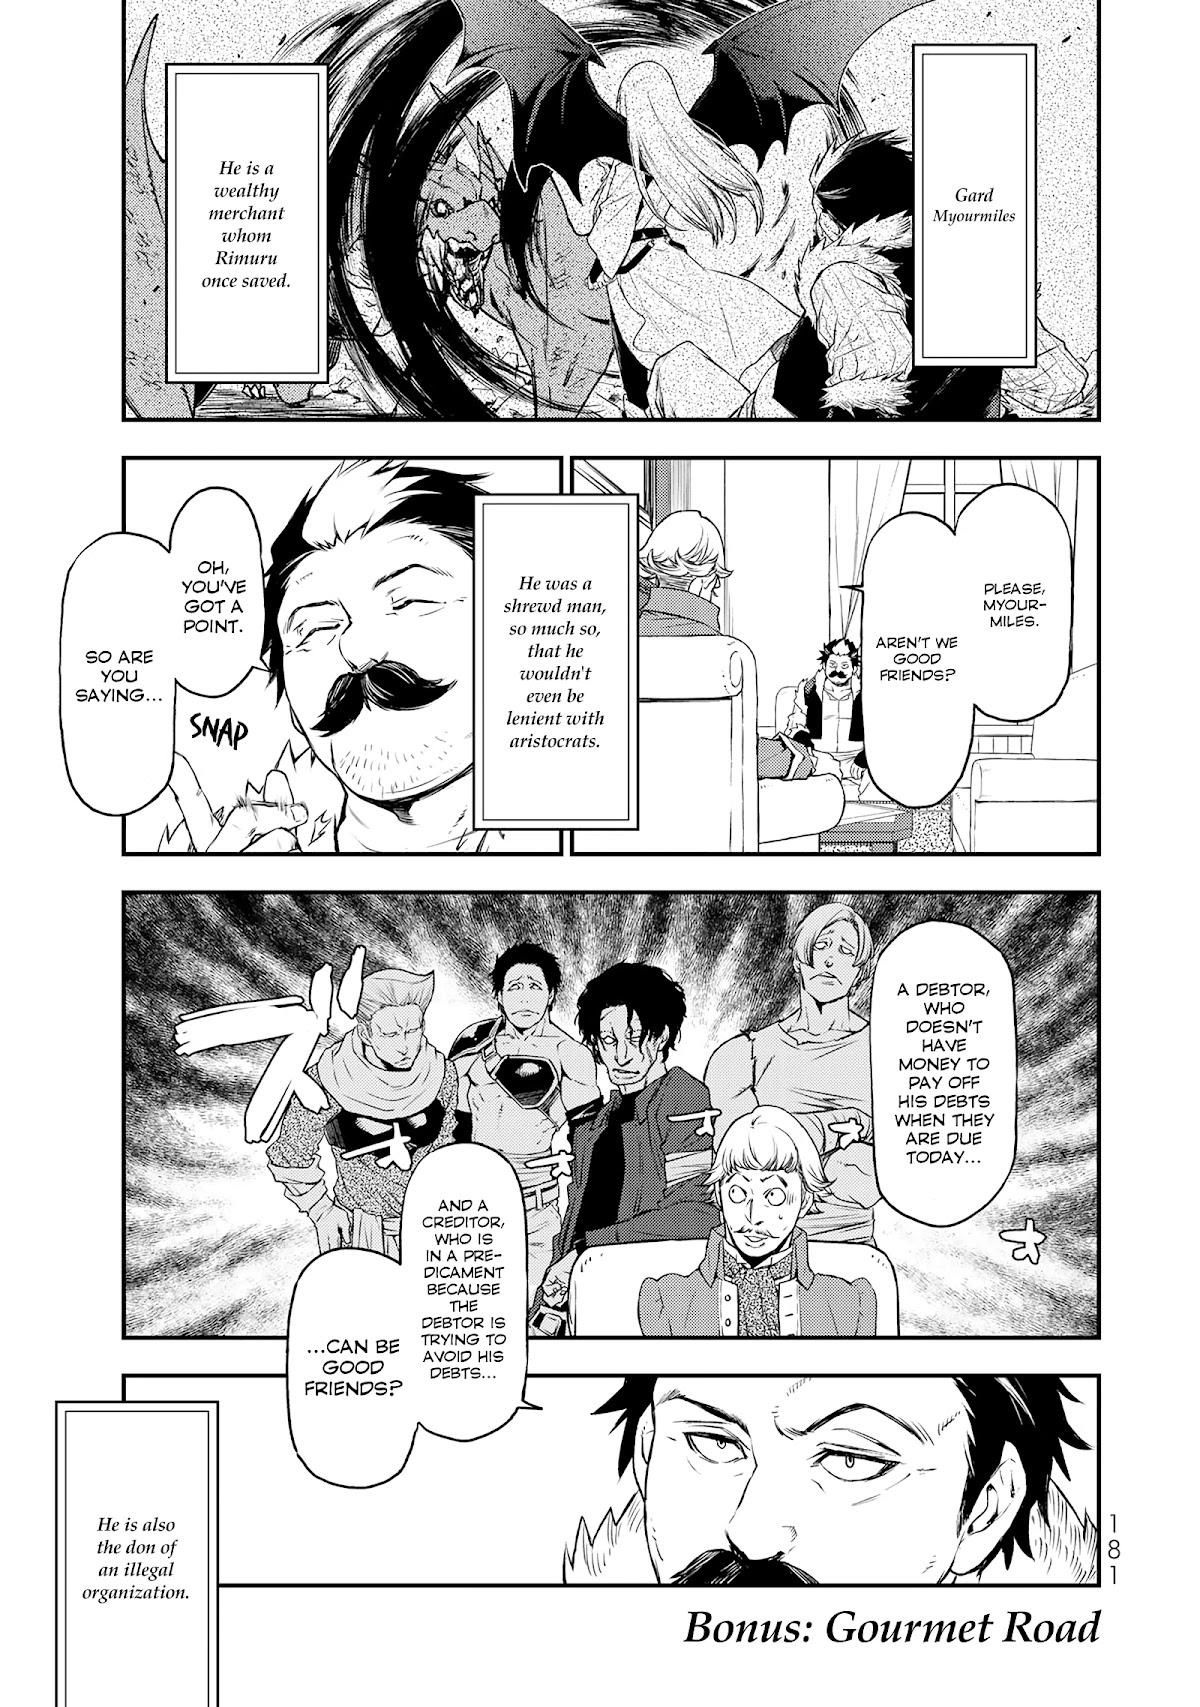 Read Tensei Shitara Slime Datta Ken Chapter 109 on Mangakakalot